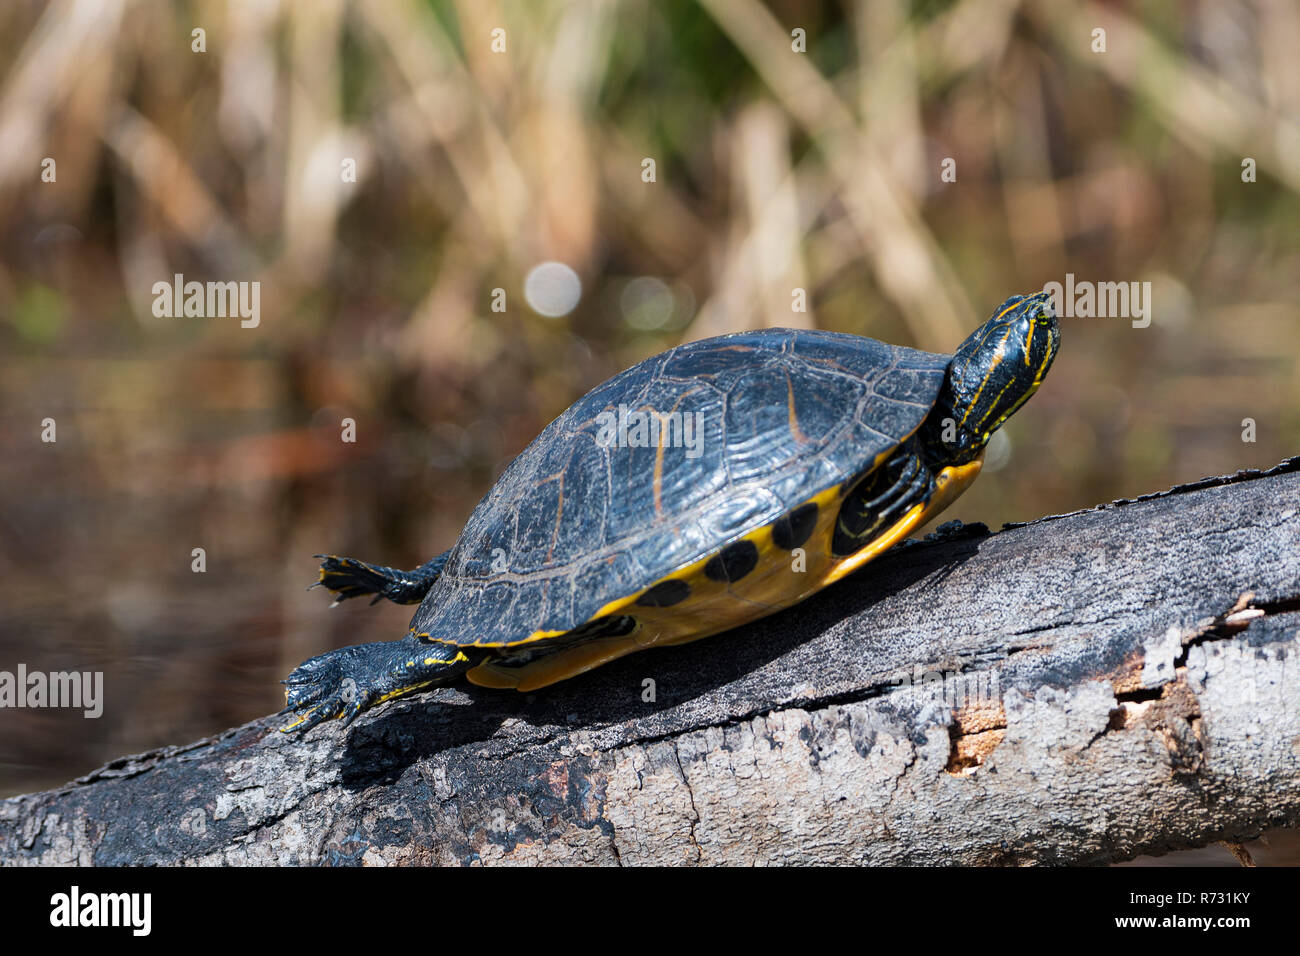 Basking Yellow River Slider Turtle Stock Photo